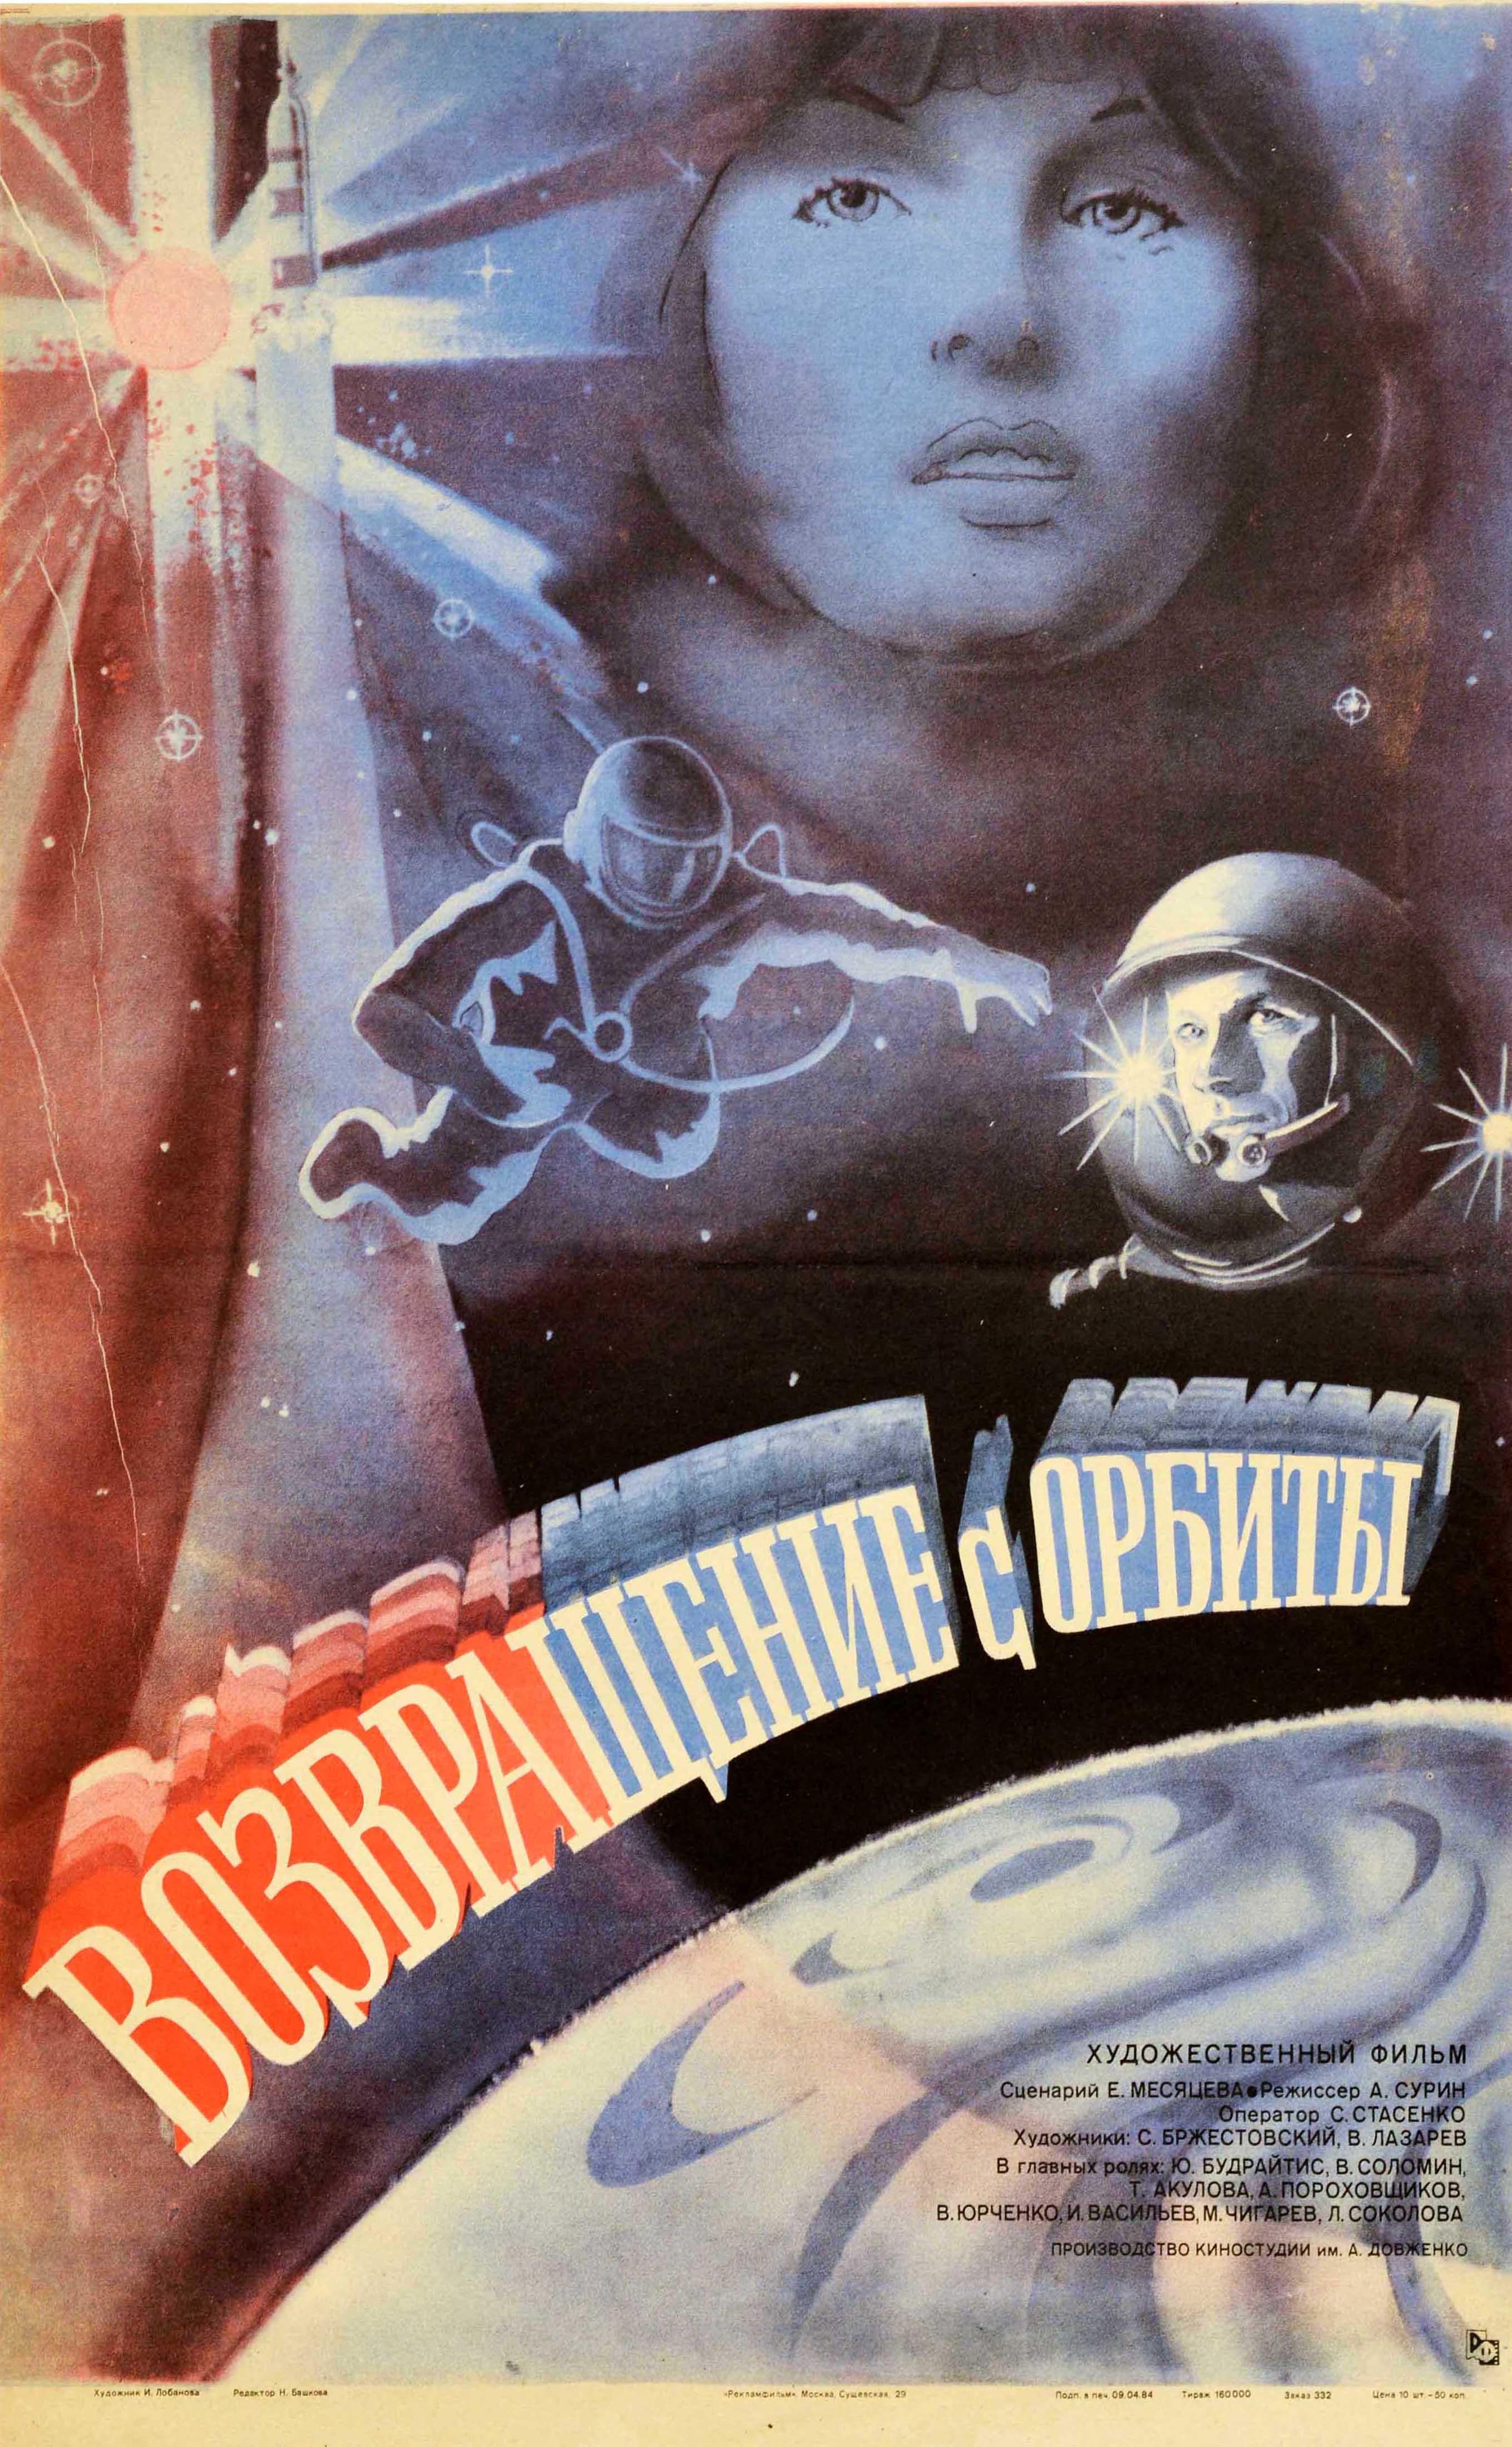 Lobanova Print - Original Vintage Film Poster Return From Orbit USSR SciFi Space Travel Movie Art